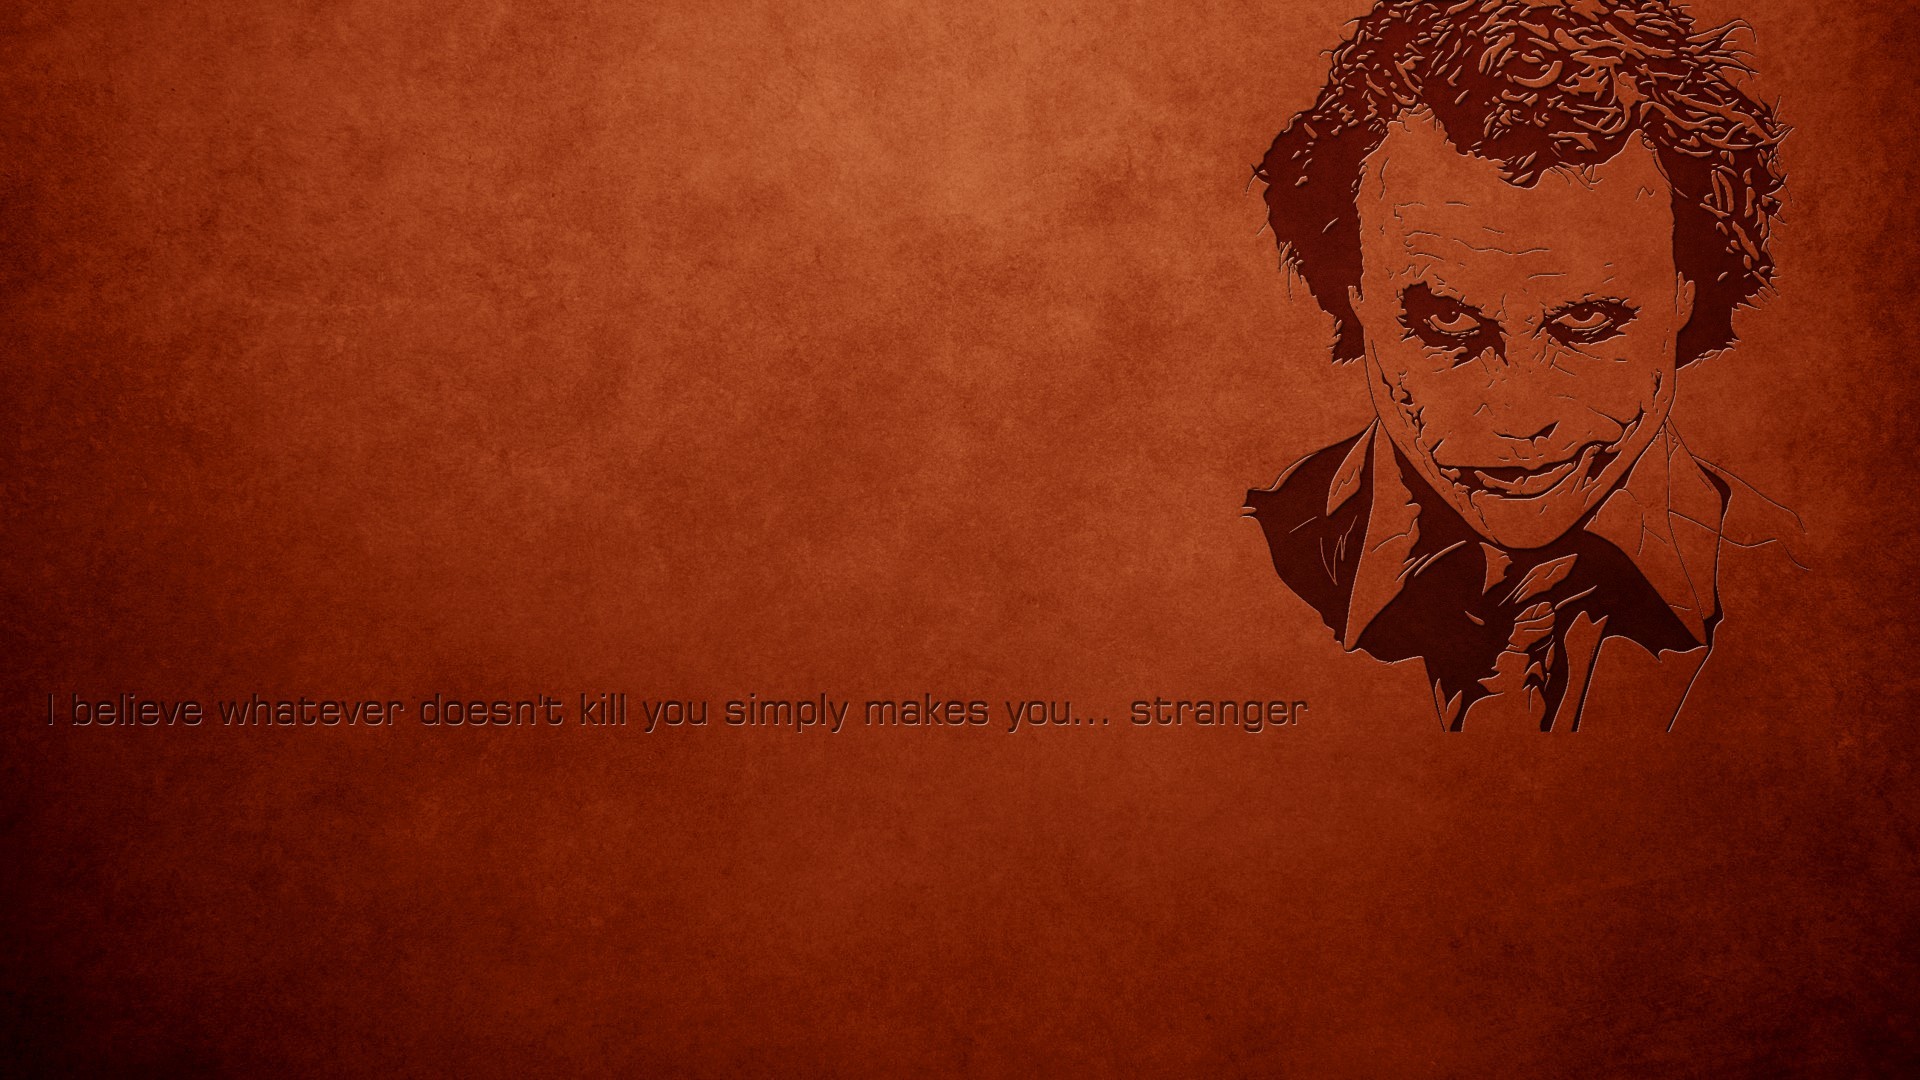 Joker Heath Ledger Quote Wallpapers Hd Desktop And Mobile Backgrounds